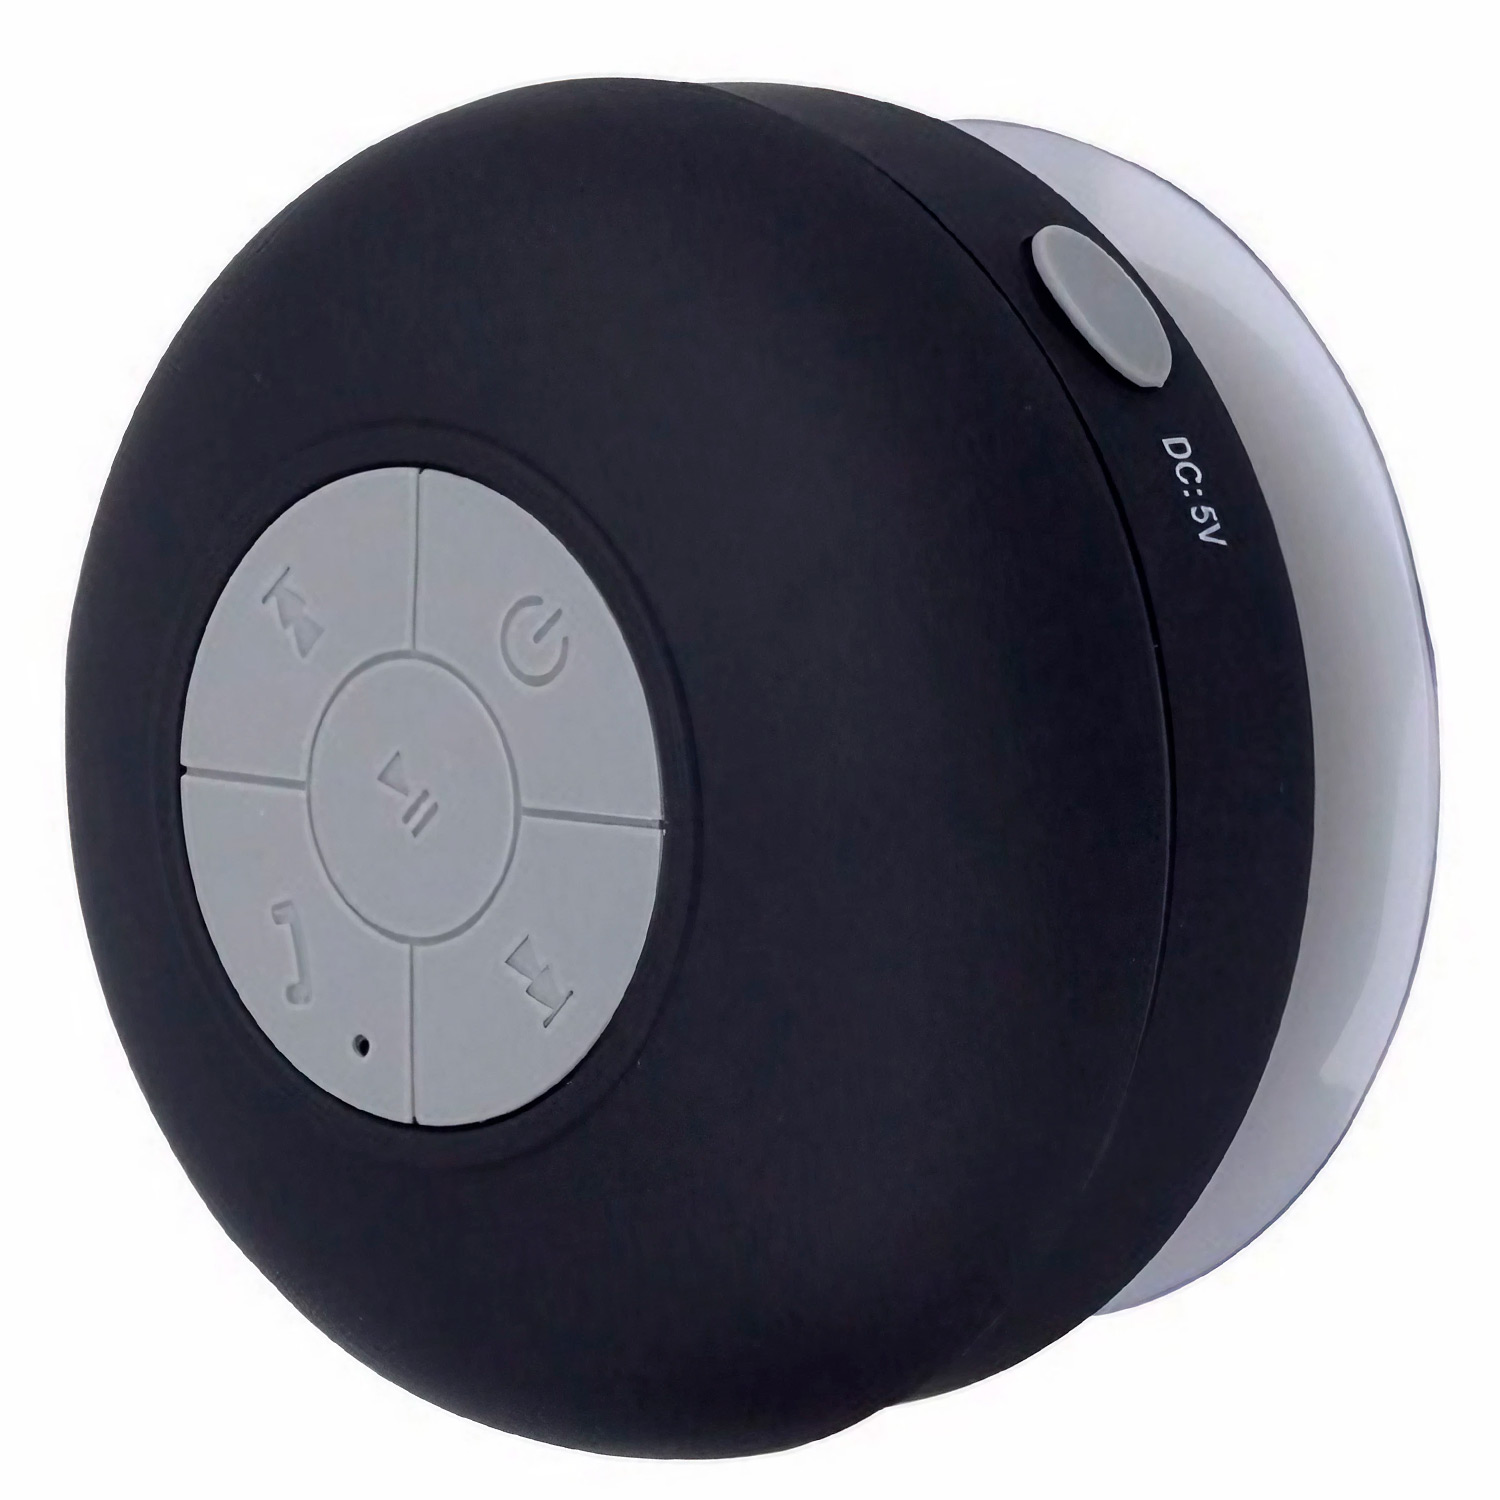 Speaker Portátil BTS-06 Bluetooth - Preto